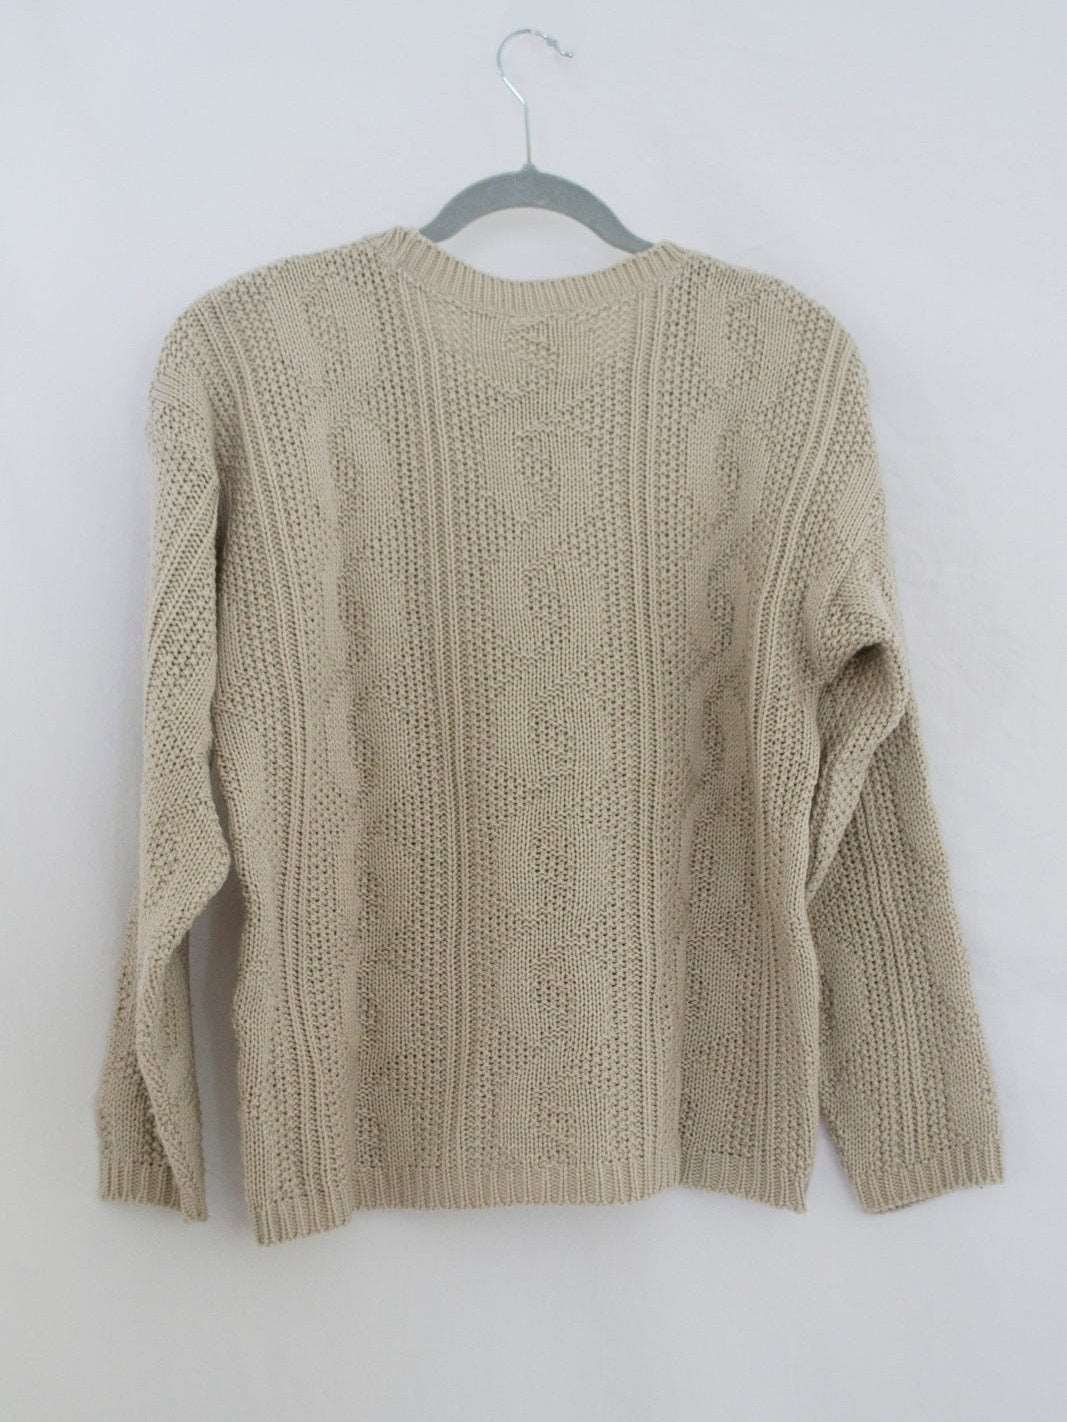 Bobbie Brooks Sweater - Medium –ThriftedEquestrian